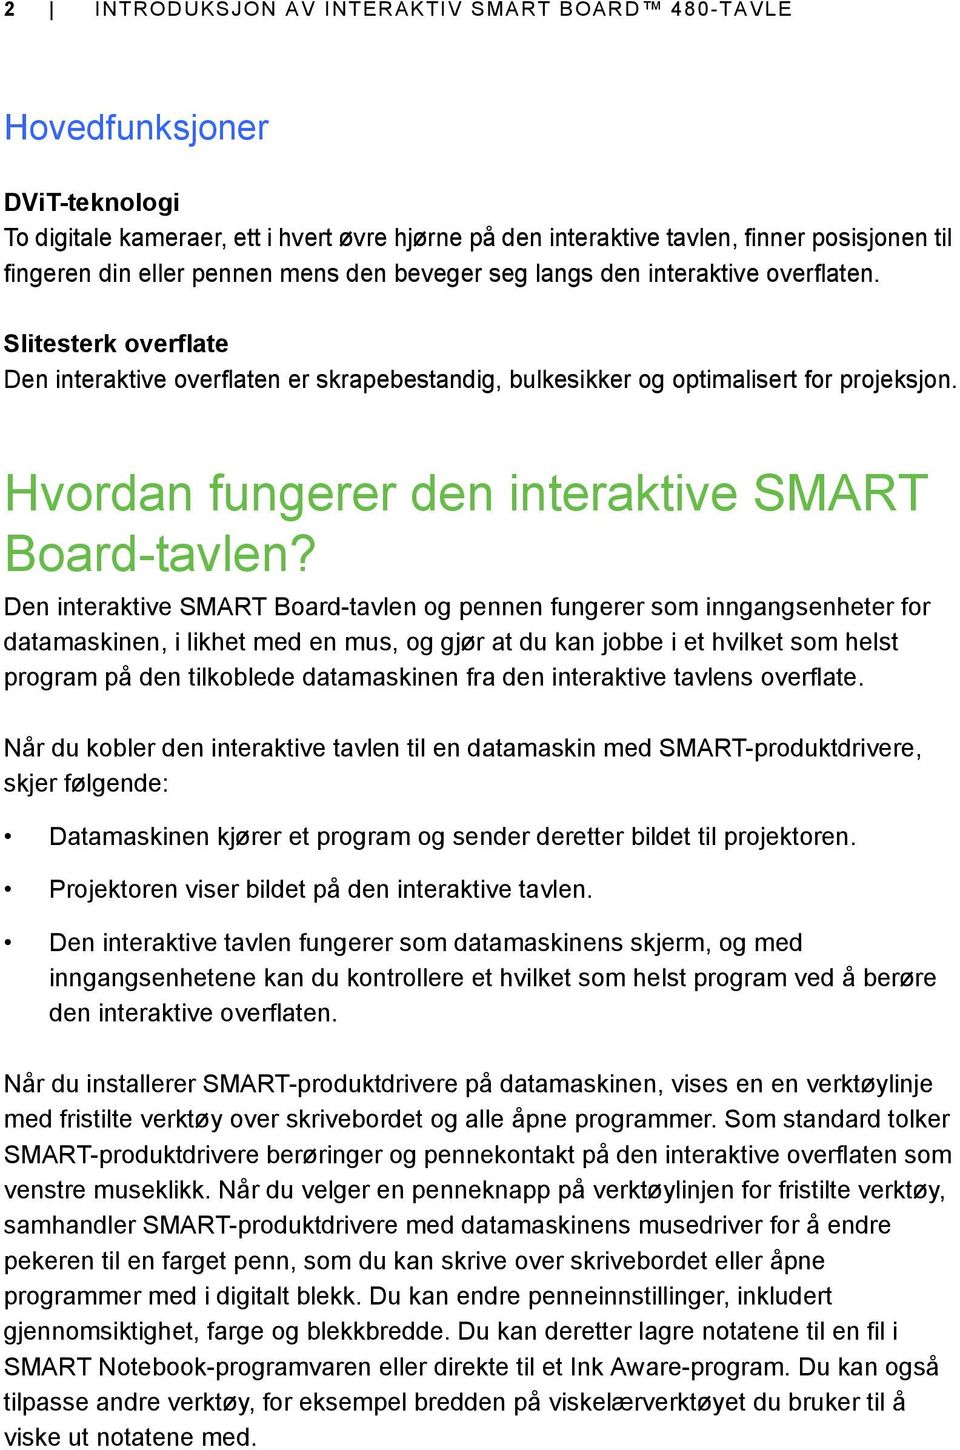 Hvordan fungerer den interaktive SMART Board-tavlen?